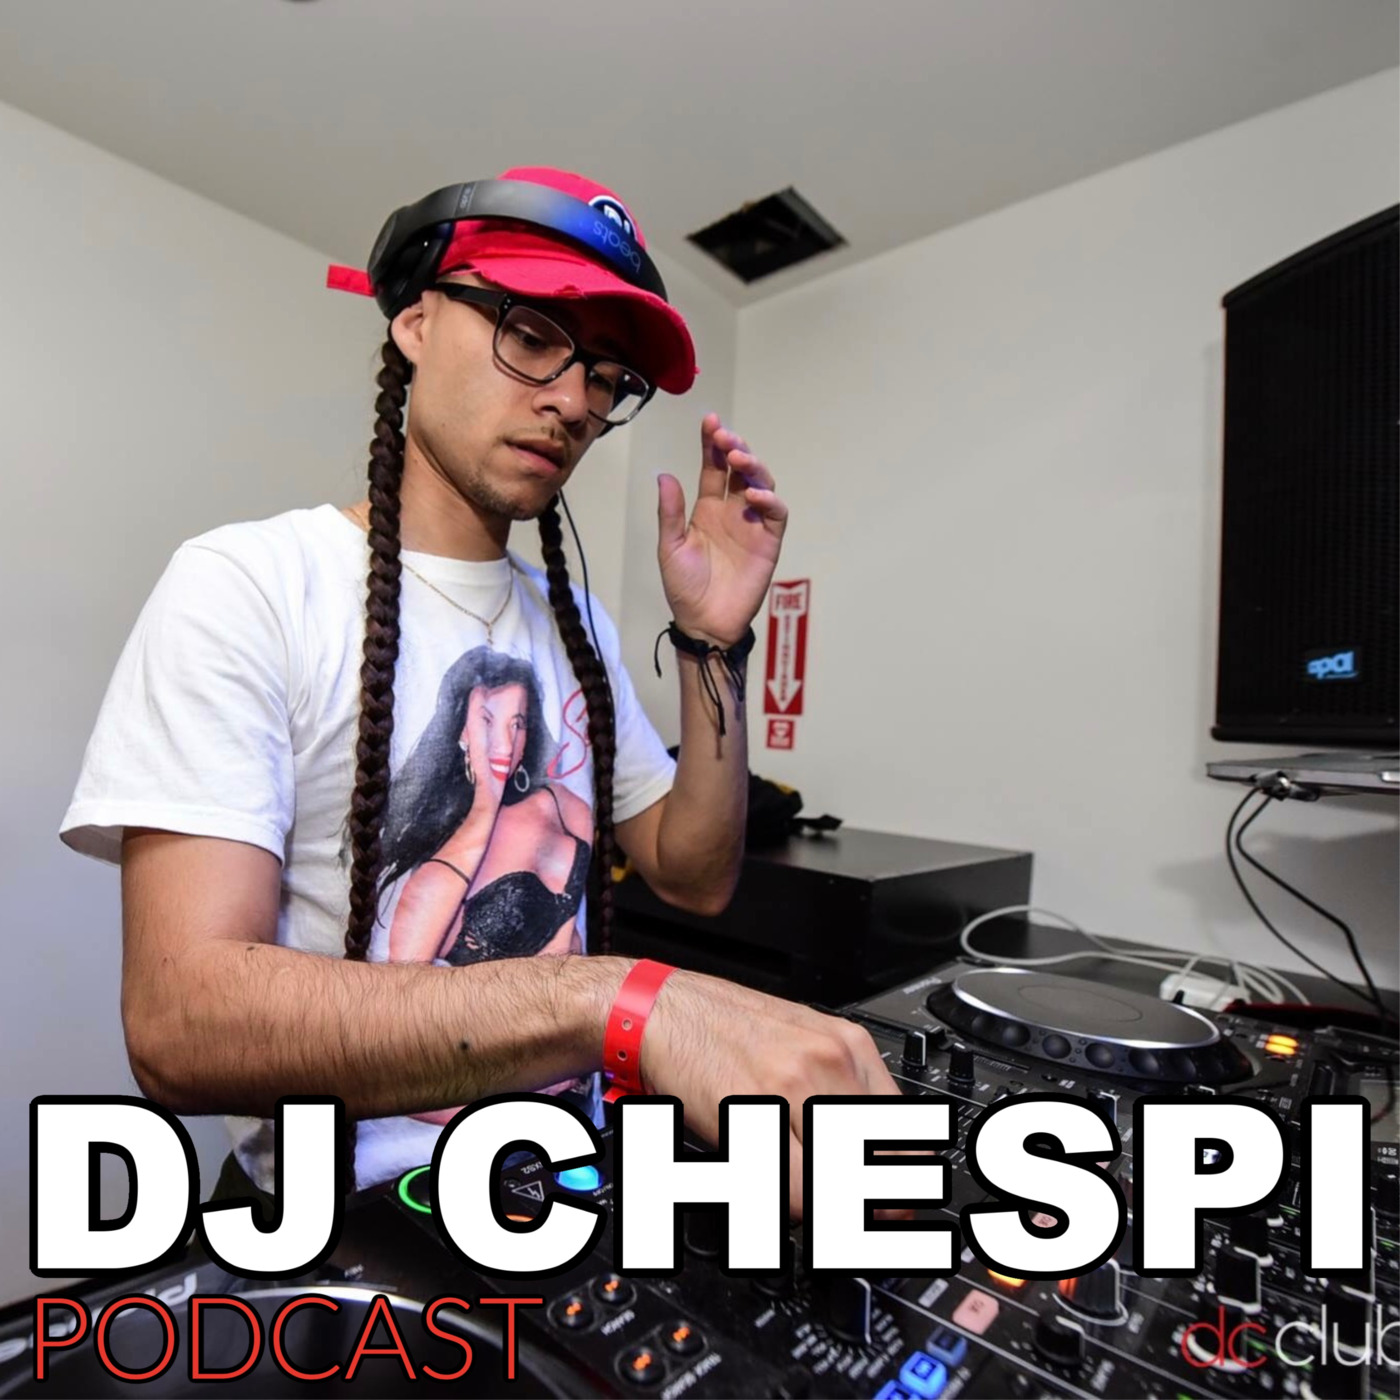 DJ CHESPI